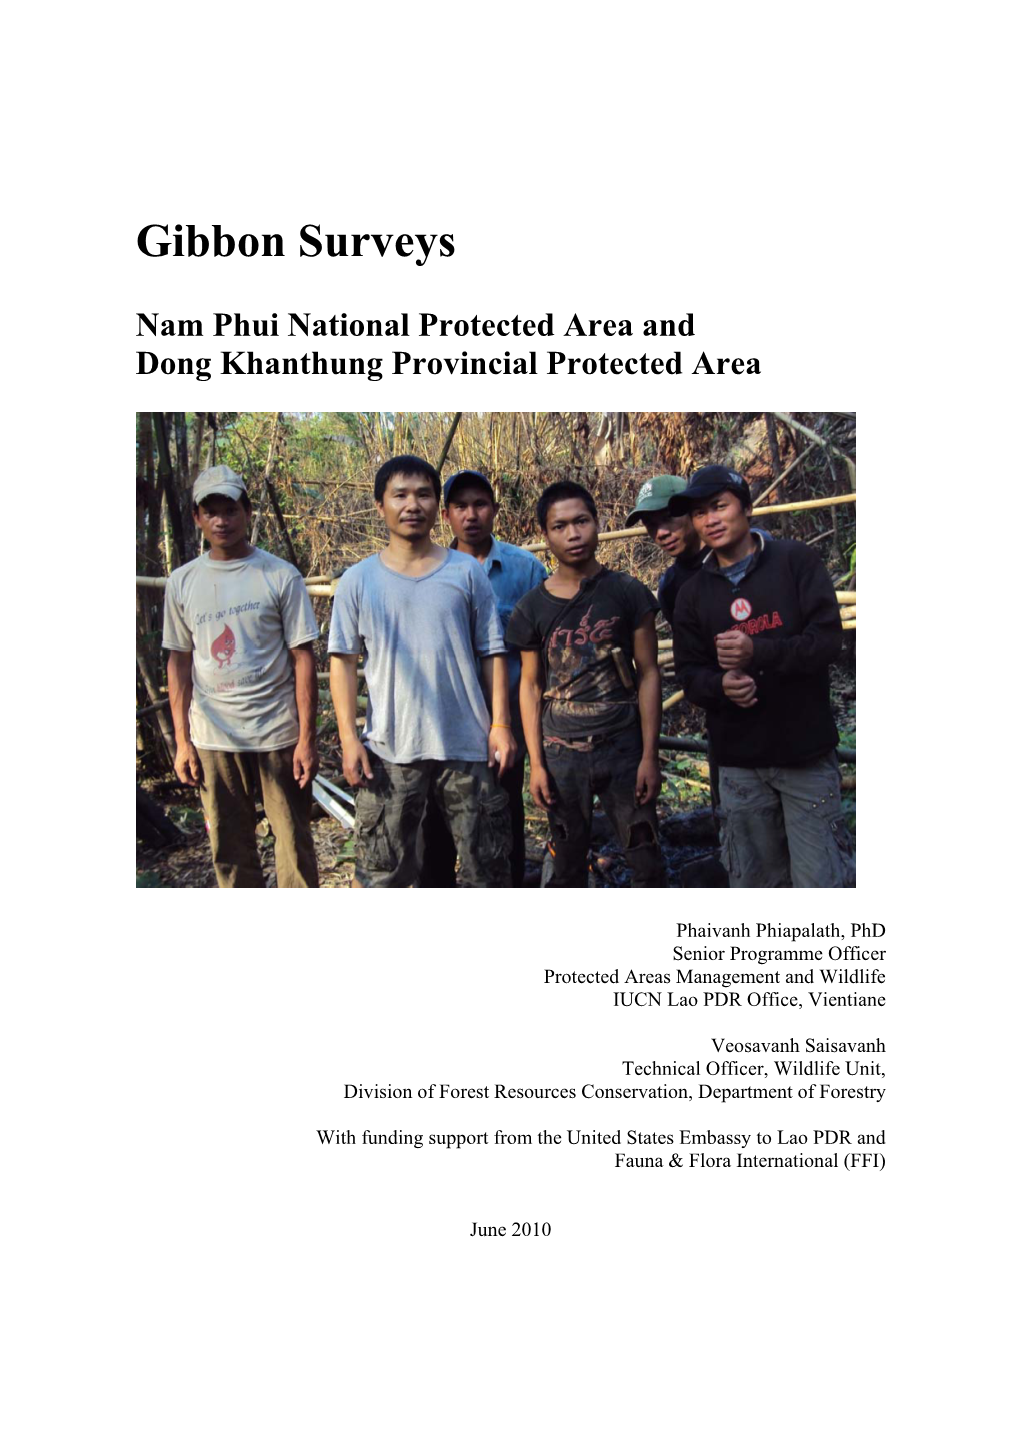 Gibbon Surveys